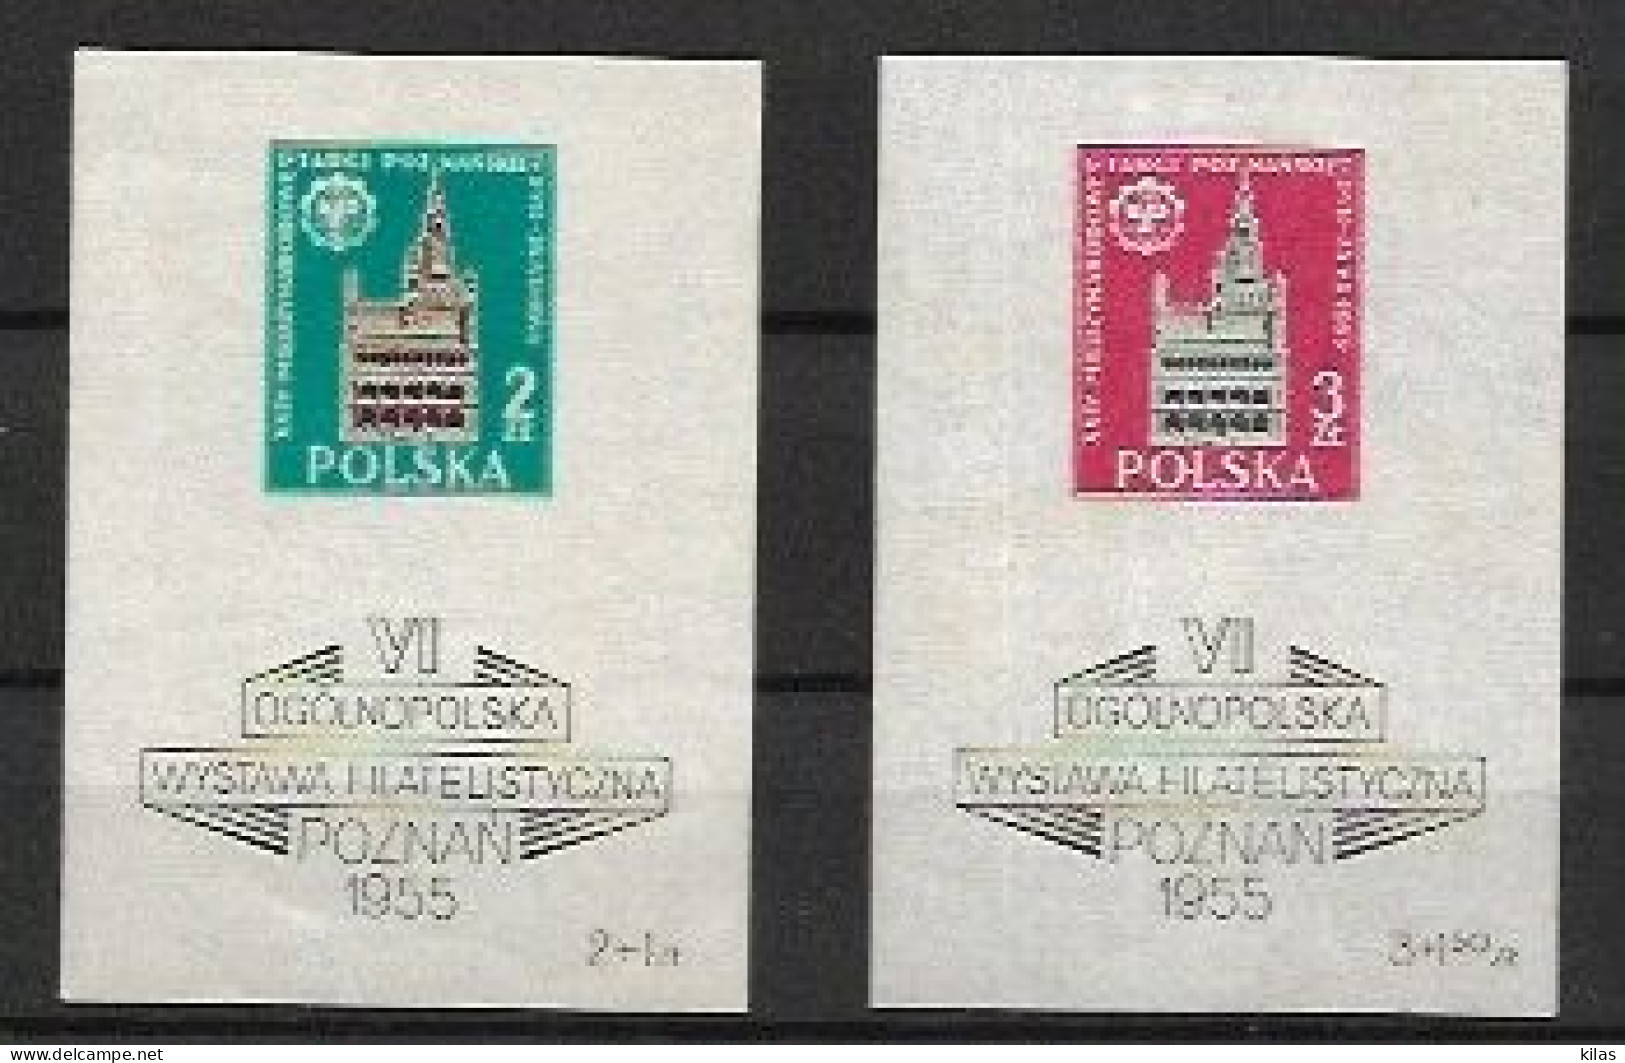 POLAND 1955 Sixth Poznan Philatelic Exhibition MNH - Blocs & Feuillets